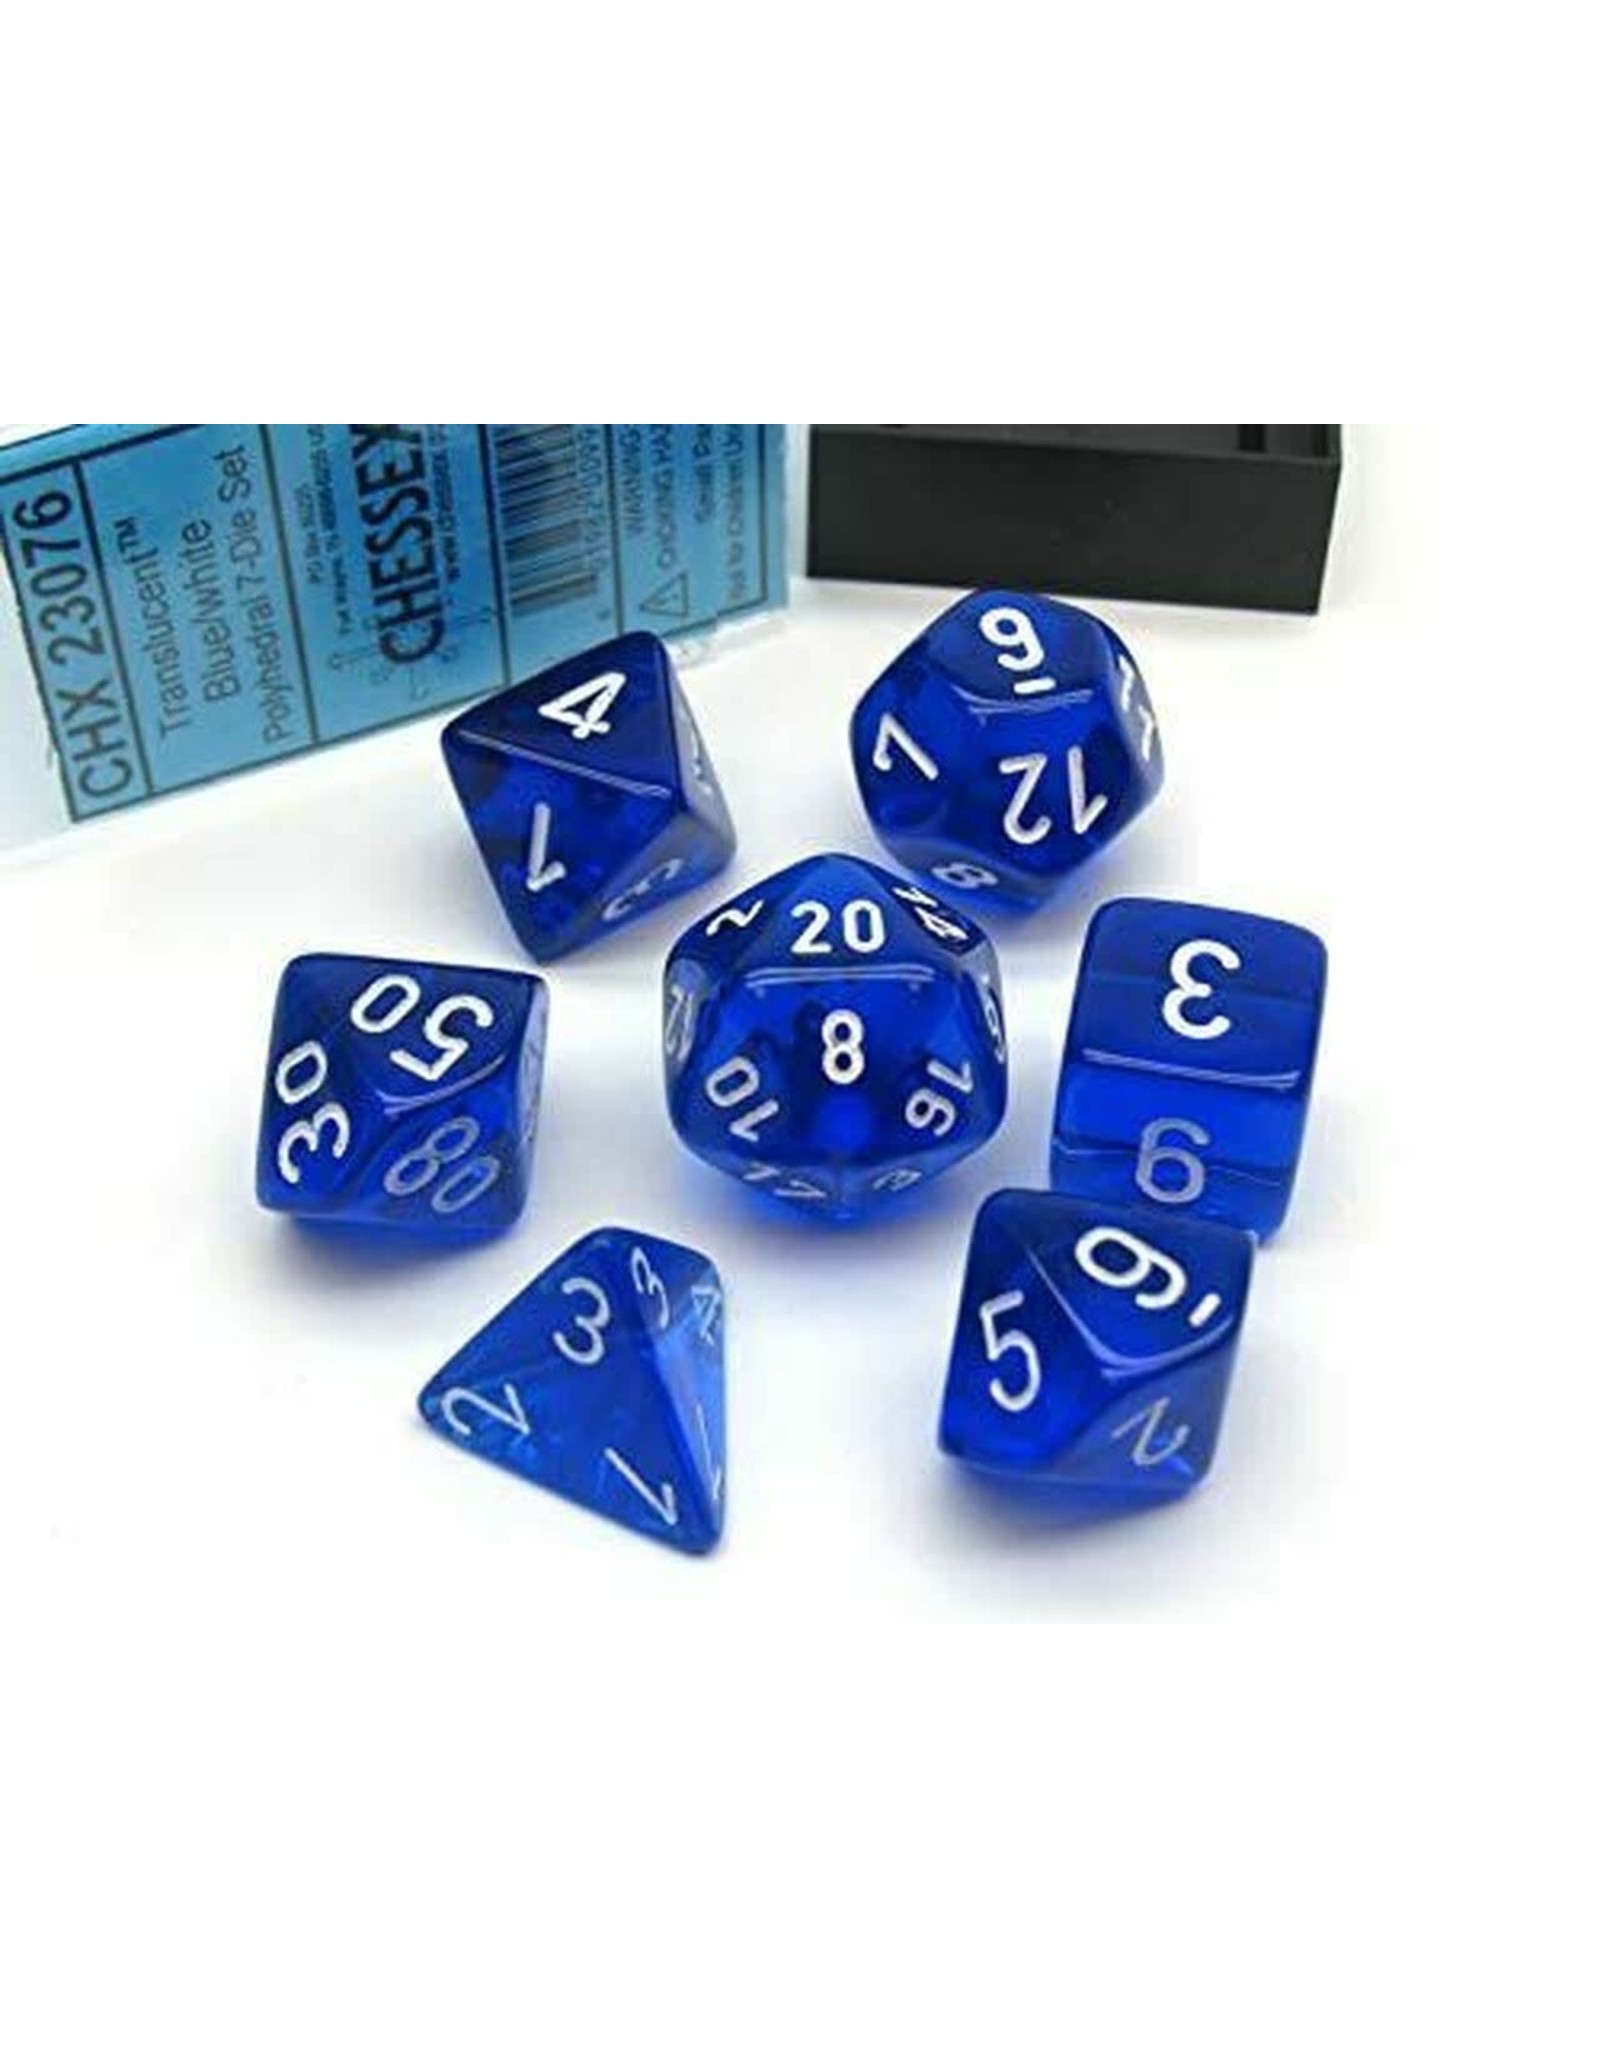 Chessex 7ct Dice Set - Translucent Blue/ White